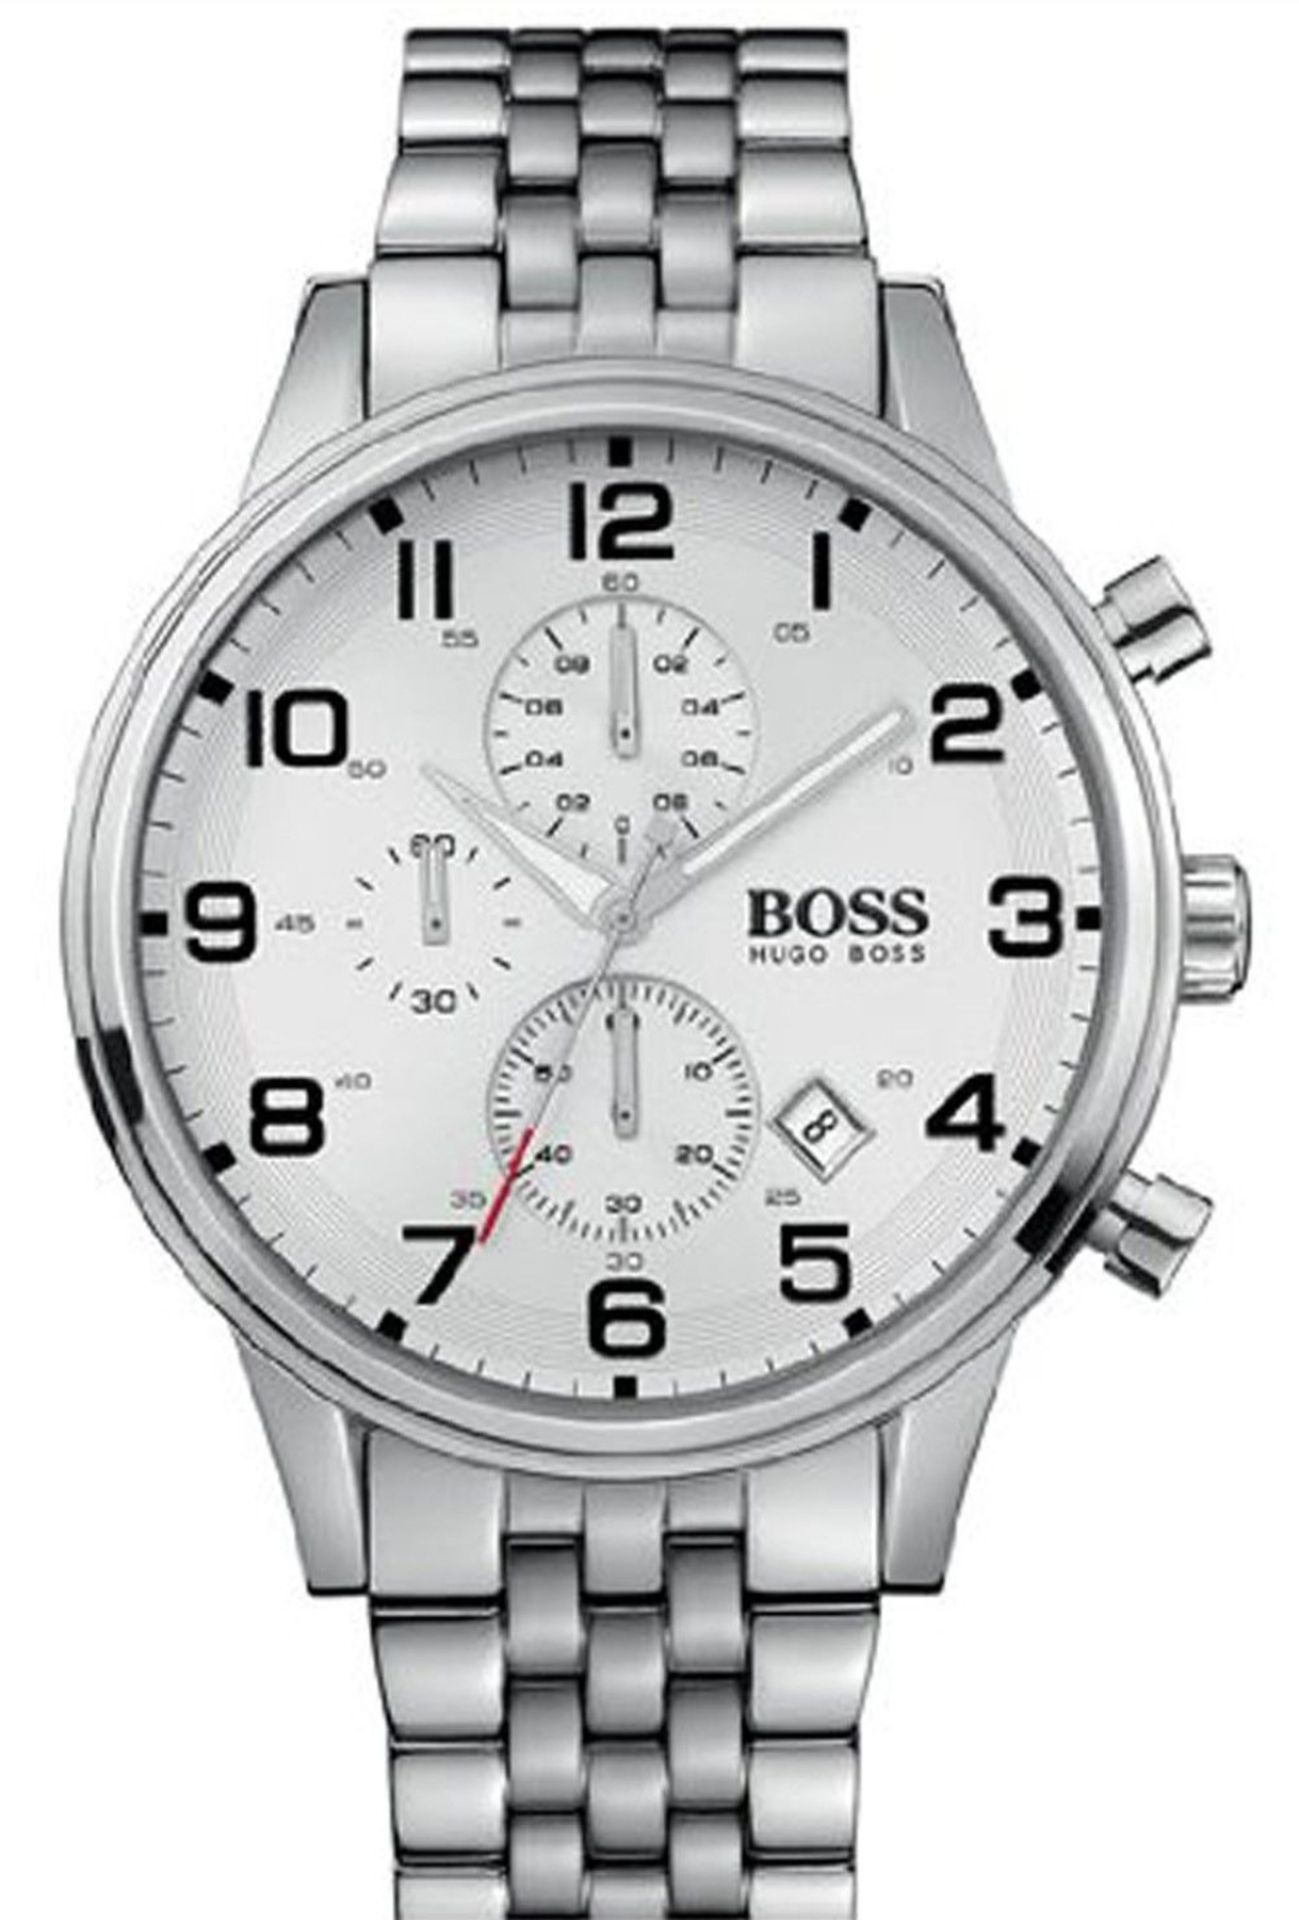 Hugo Boss 1512445 Men's Aeroliner Silver Bracelet Chronograph Watch - Image 2 of 5